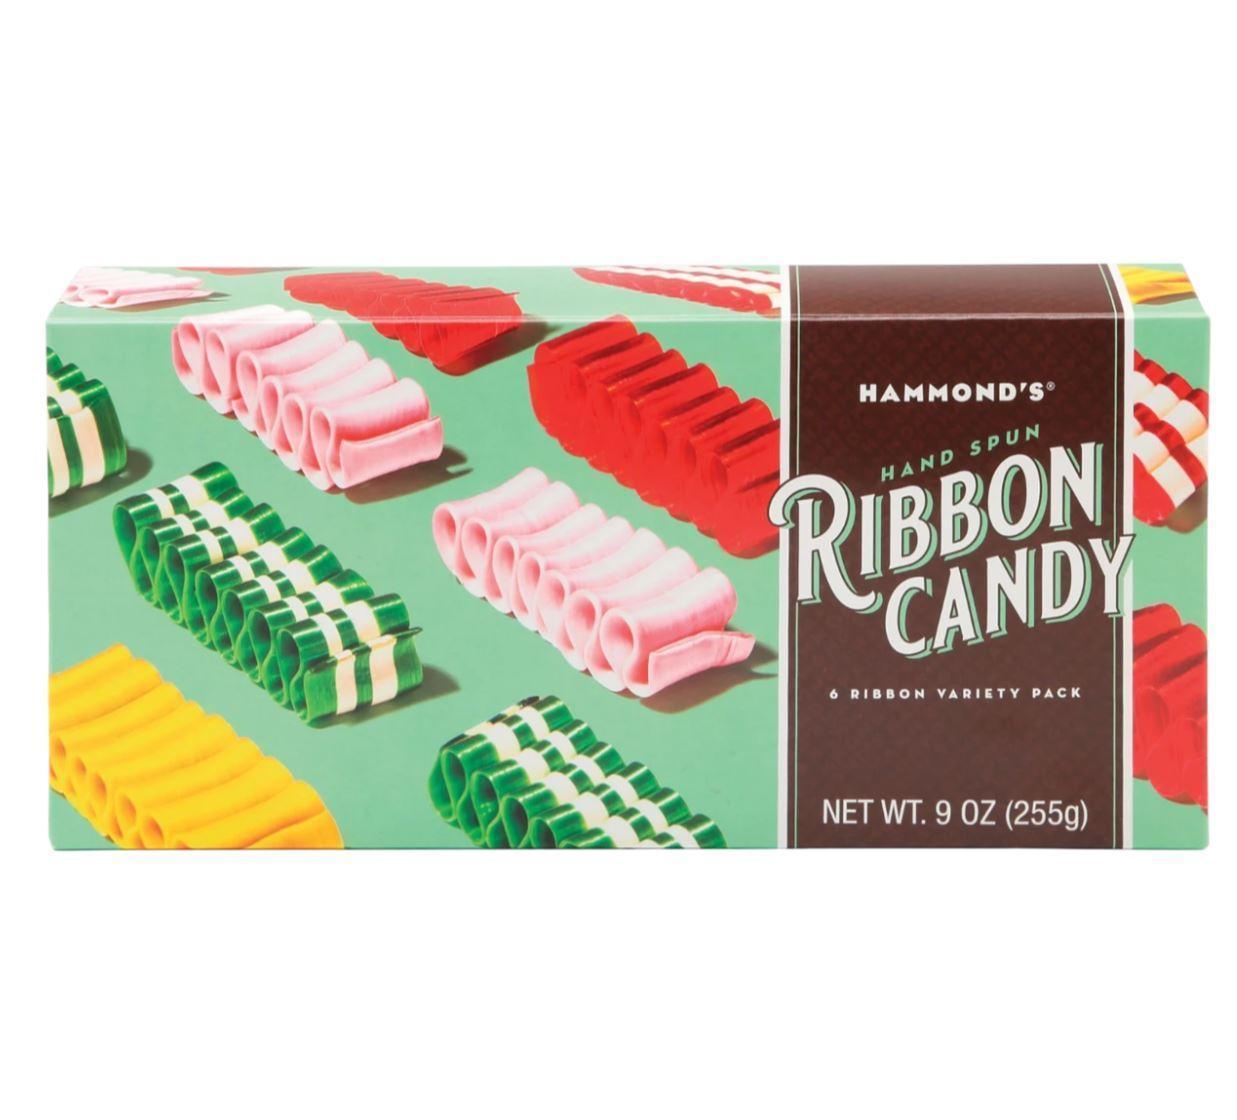 Hammond's Hand Spun Ribbon Candy Gift Box